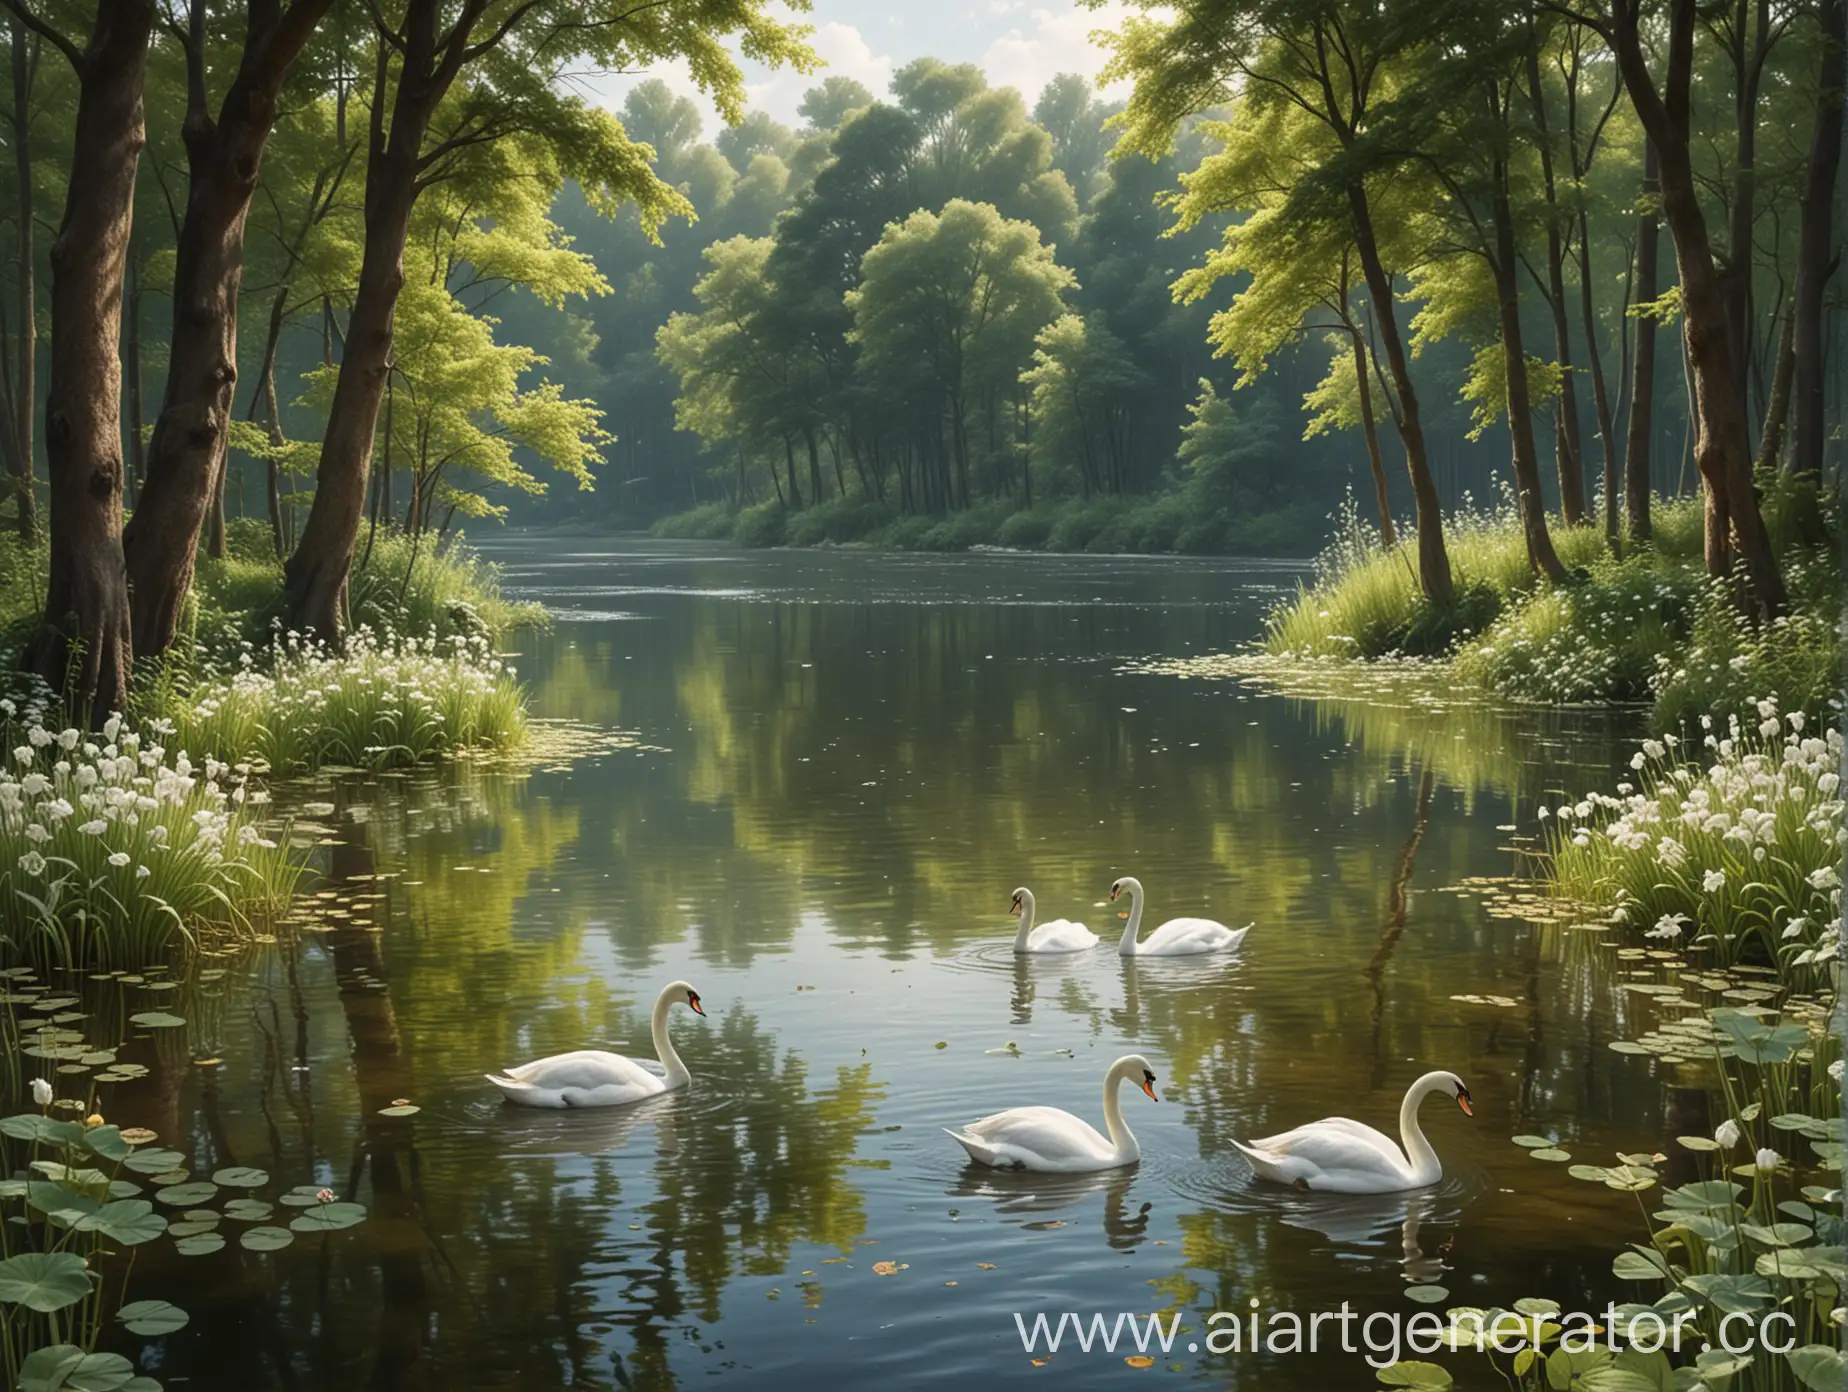 Озеро в лесу с плавающими лебедями, отличное качество, реализм